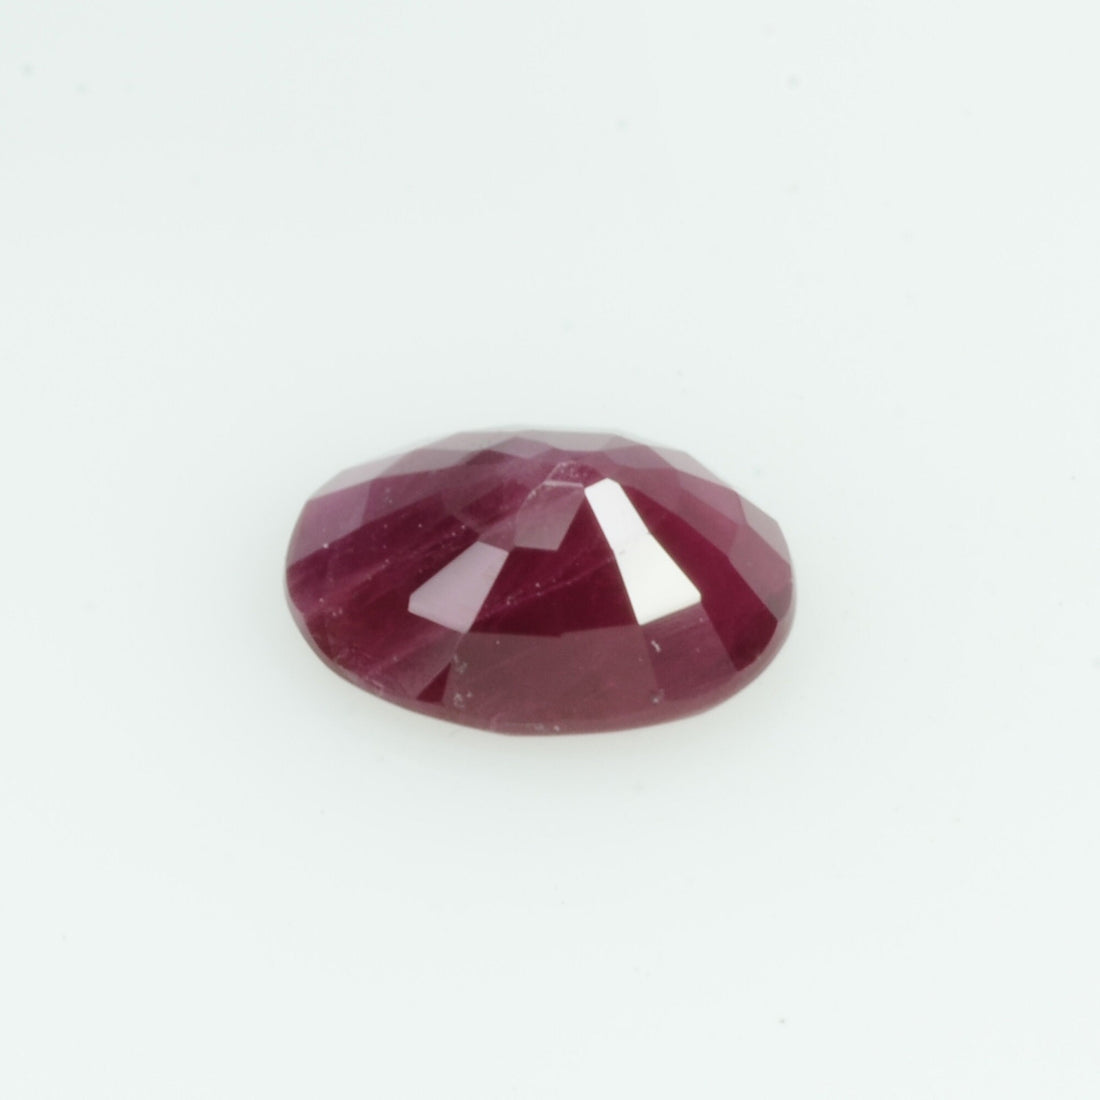 0.63 Cts Natural Burma Ruby Loose Gemstone Oval Cut